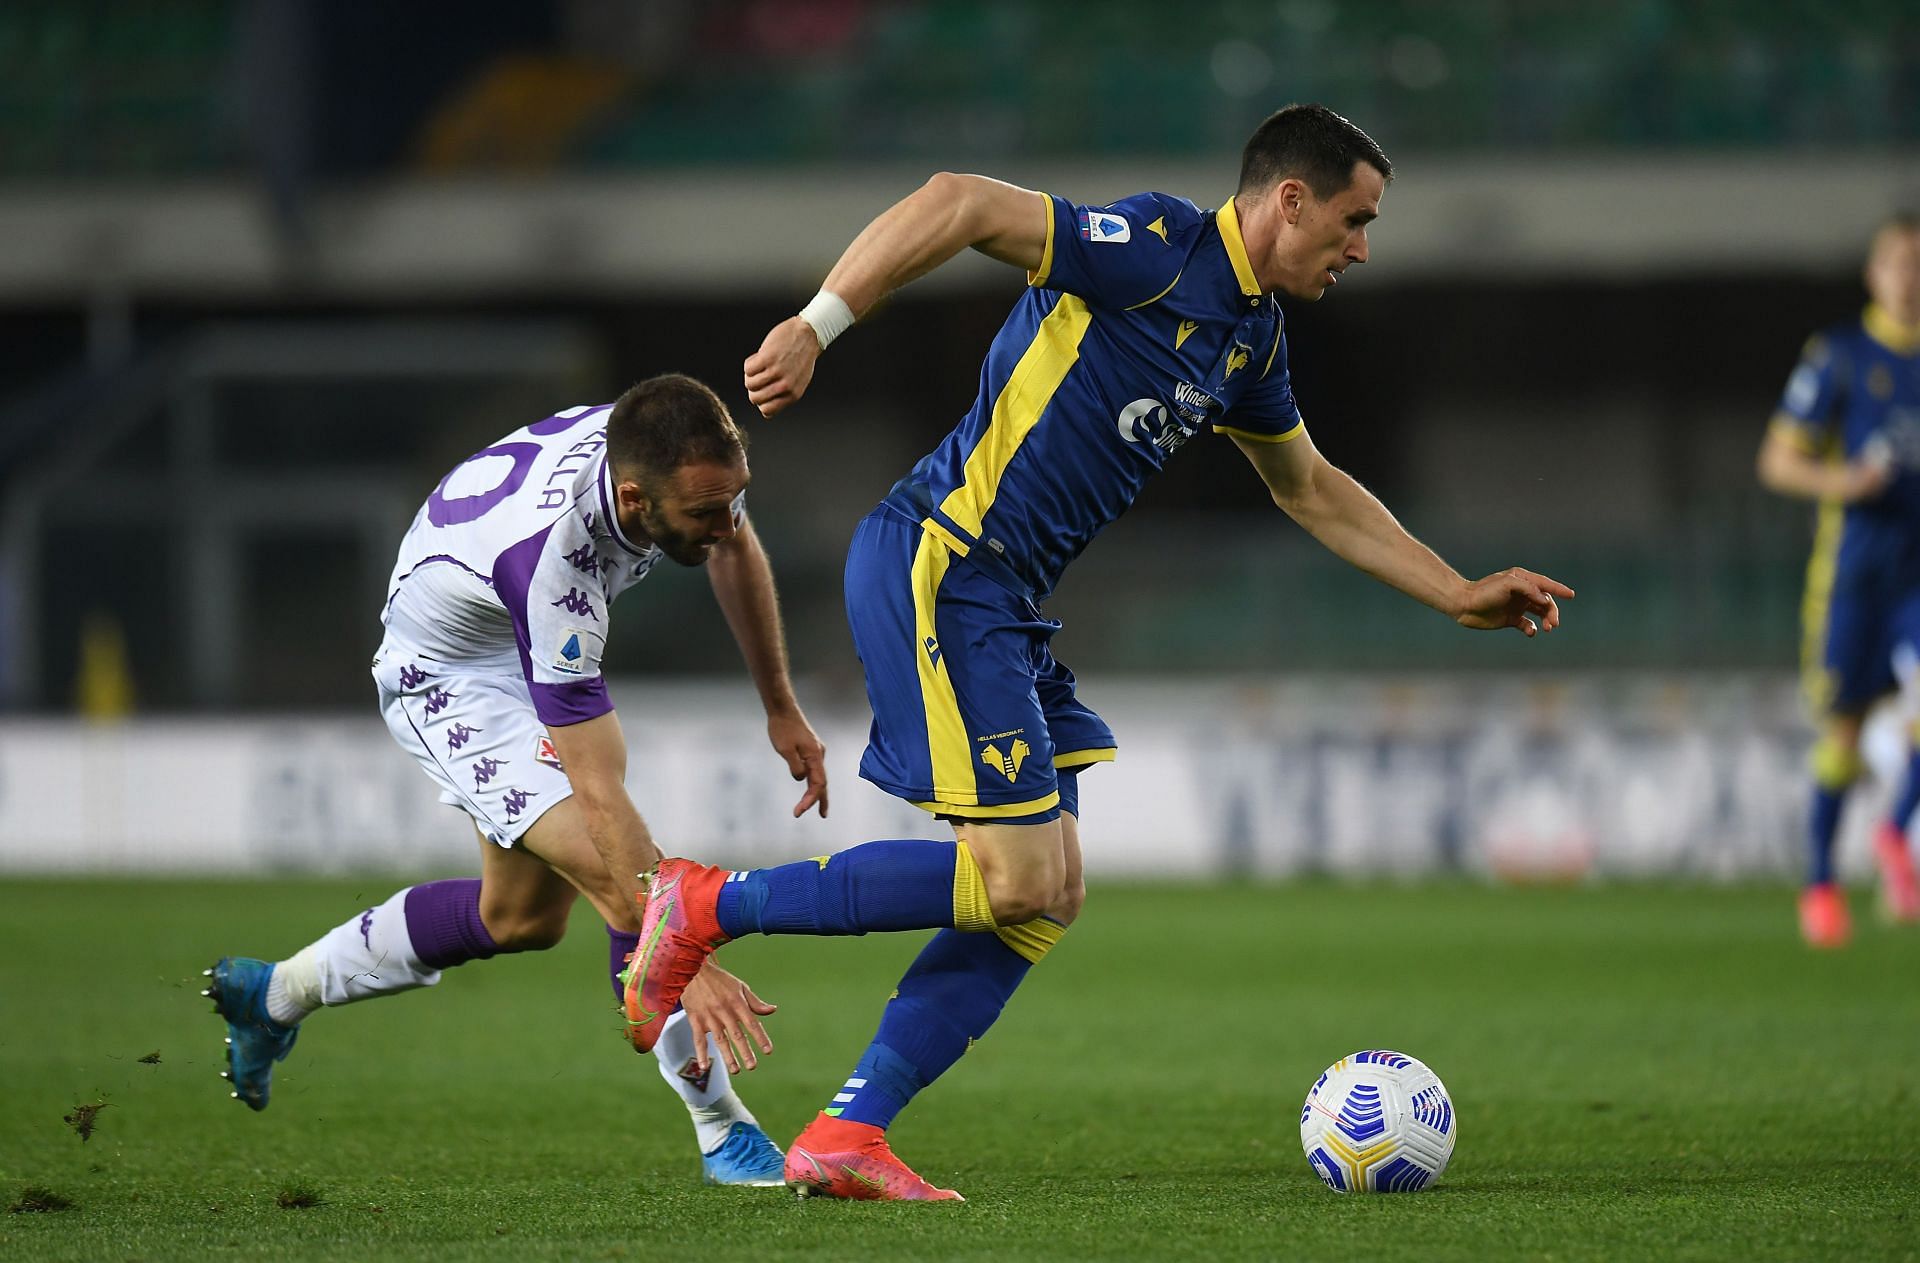 Fiorentina play host to Hellas Verona on Sunday